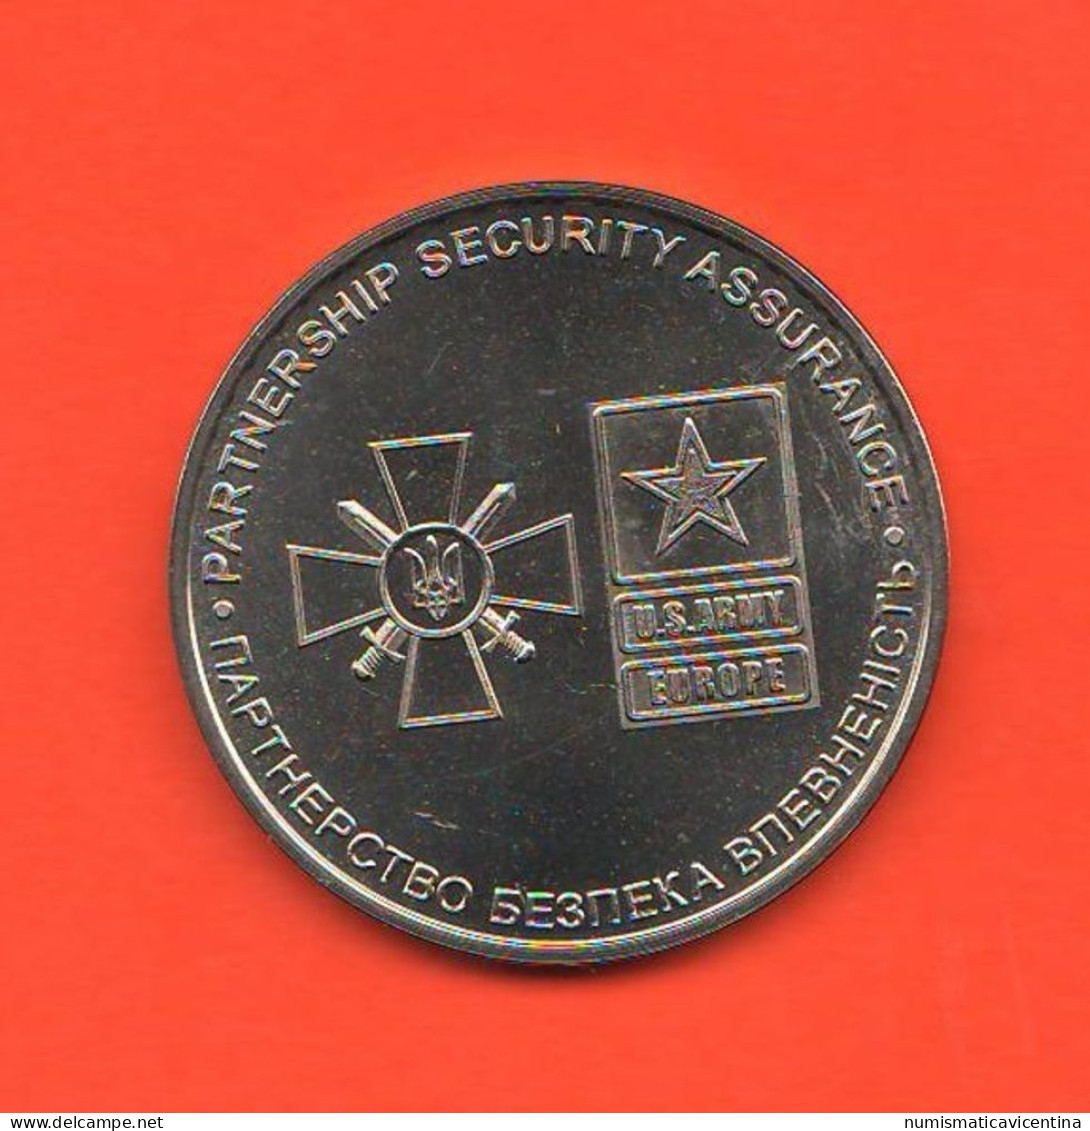 Saber Guardian Rapid Trident 2015 Ukraina Ucraine America Partnership Security Assurance Medal Medaille - Firma's